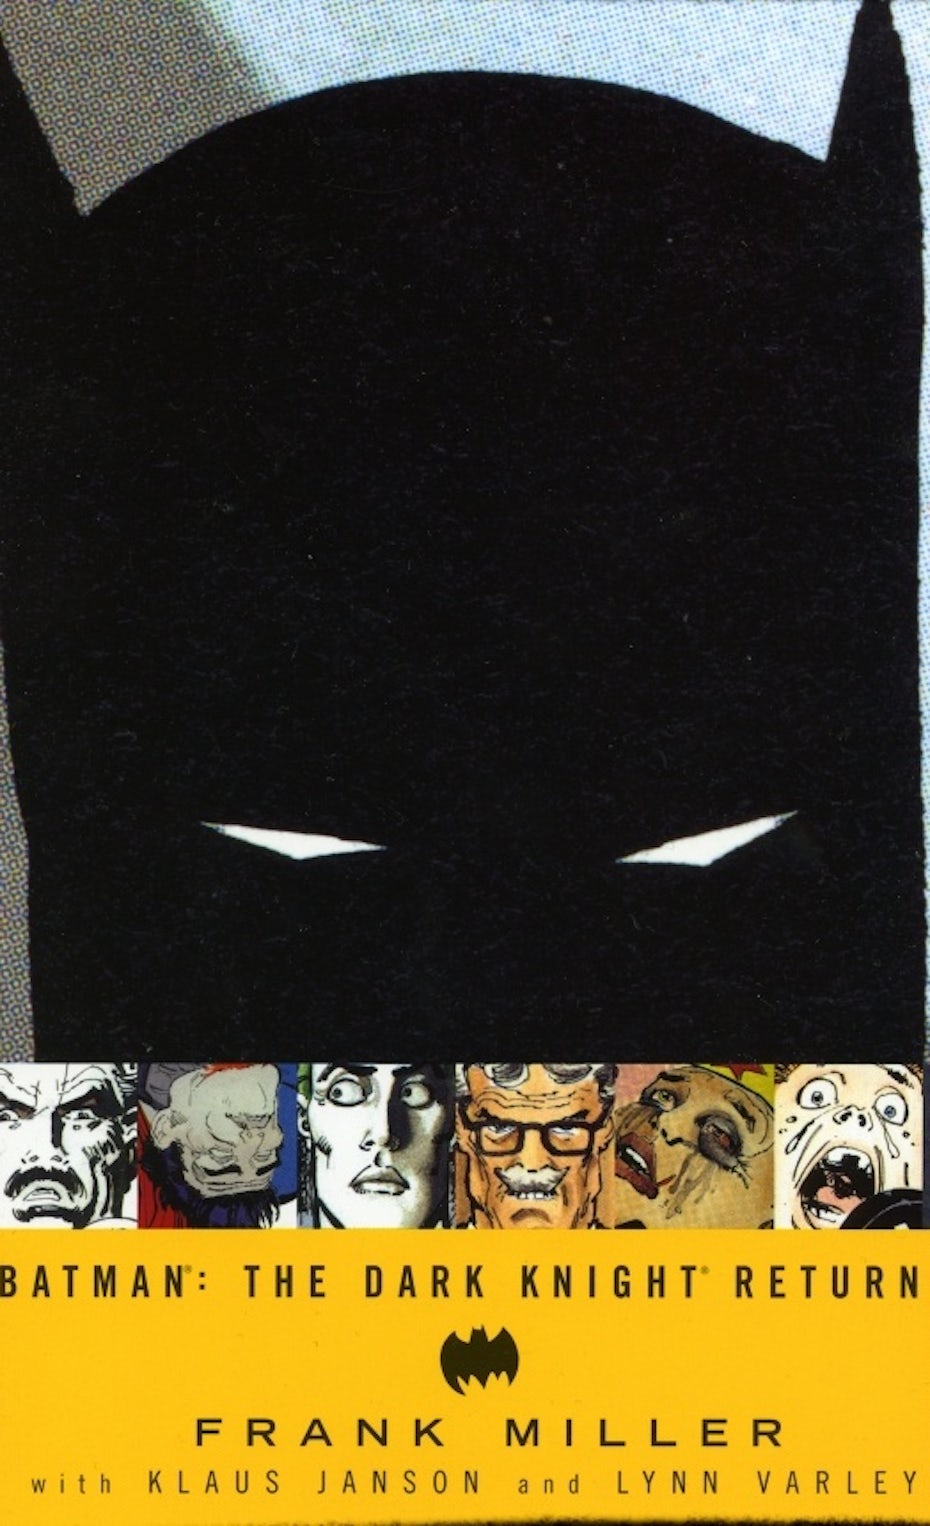 Batman: The Dark Knight Returns cover design